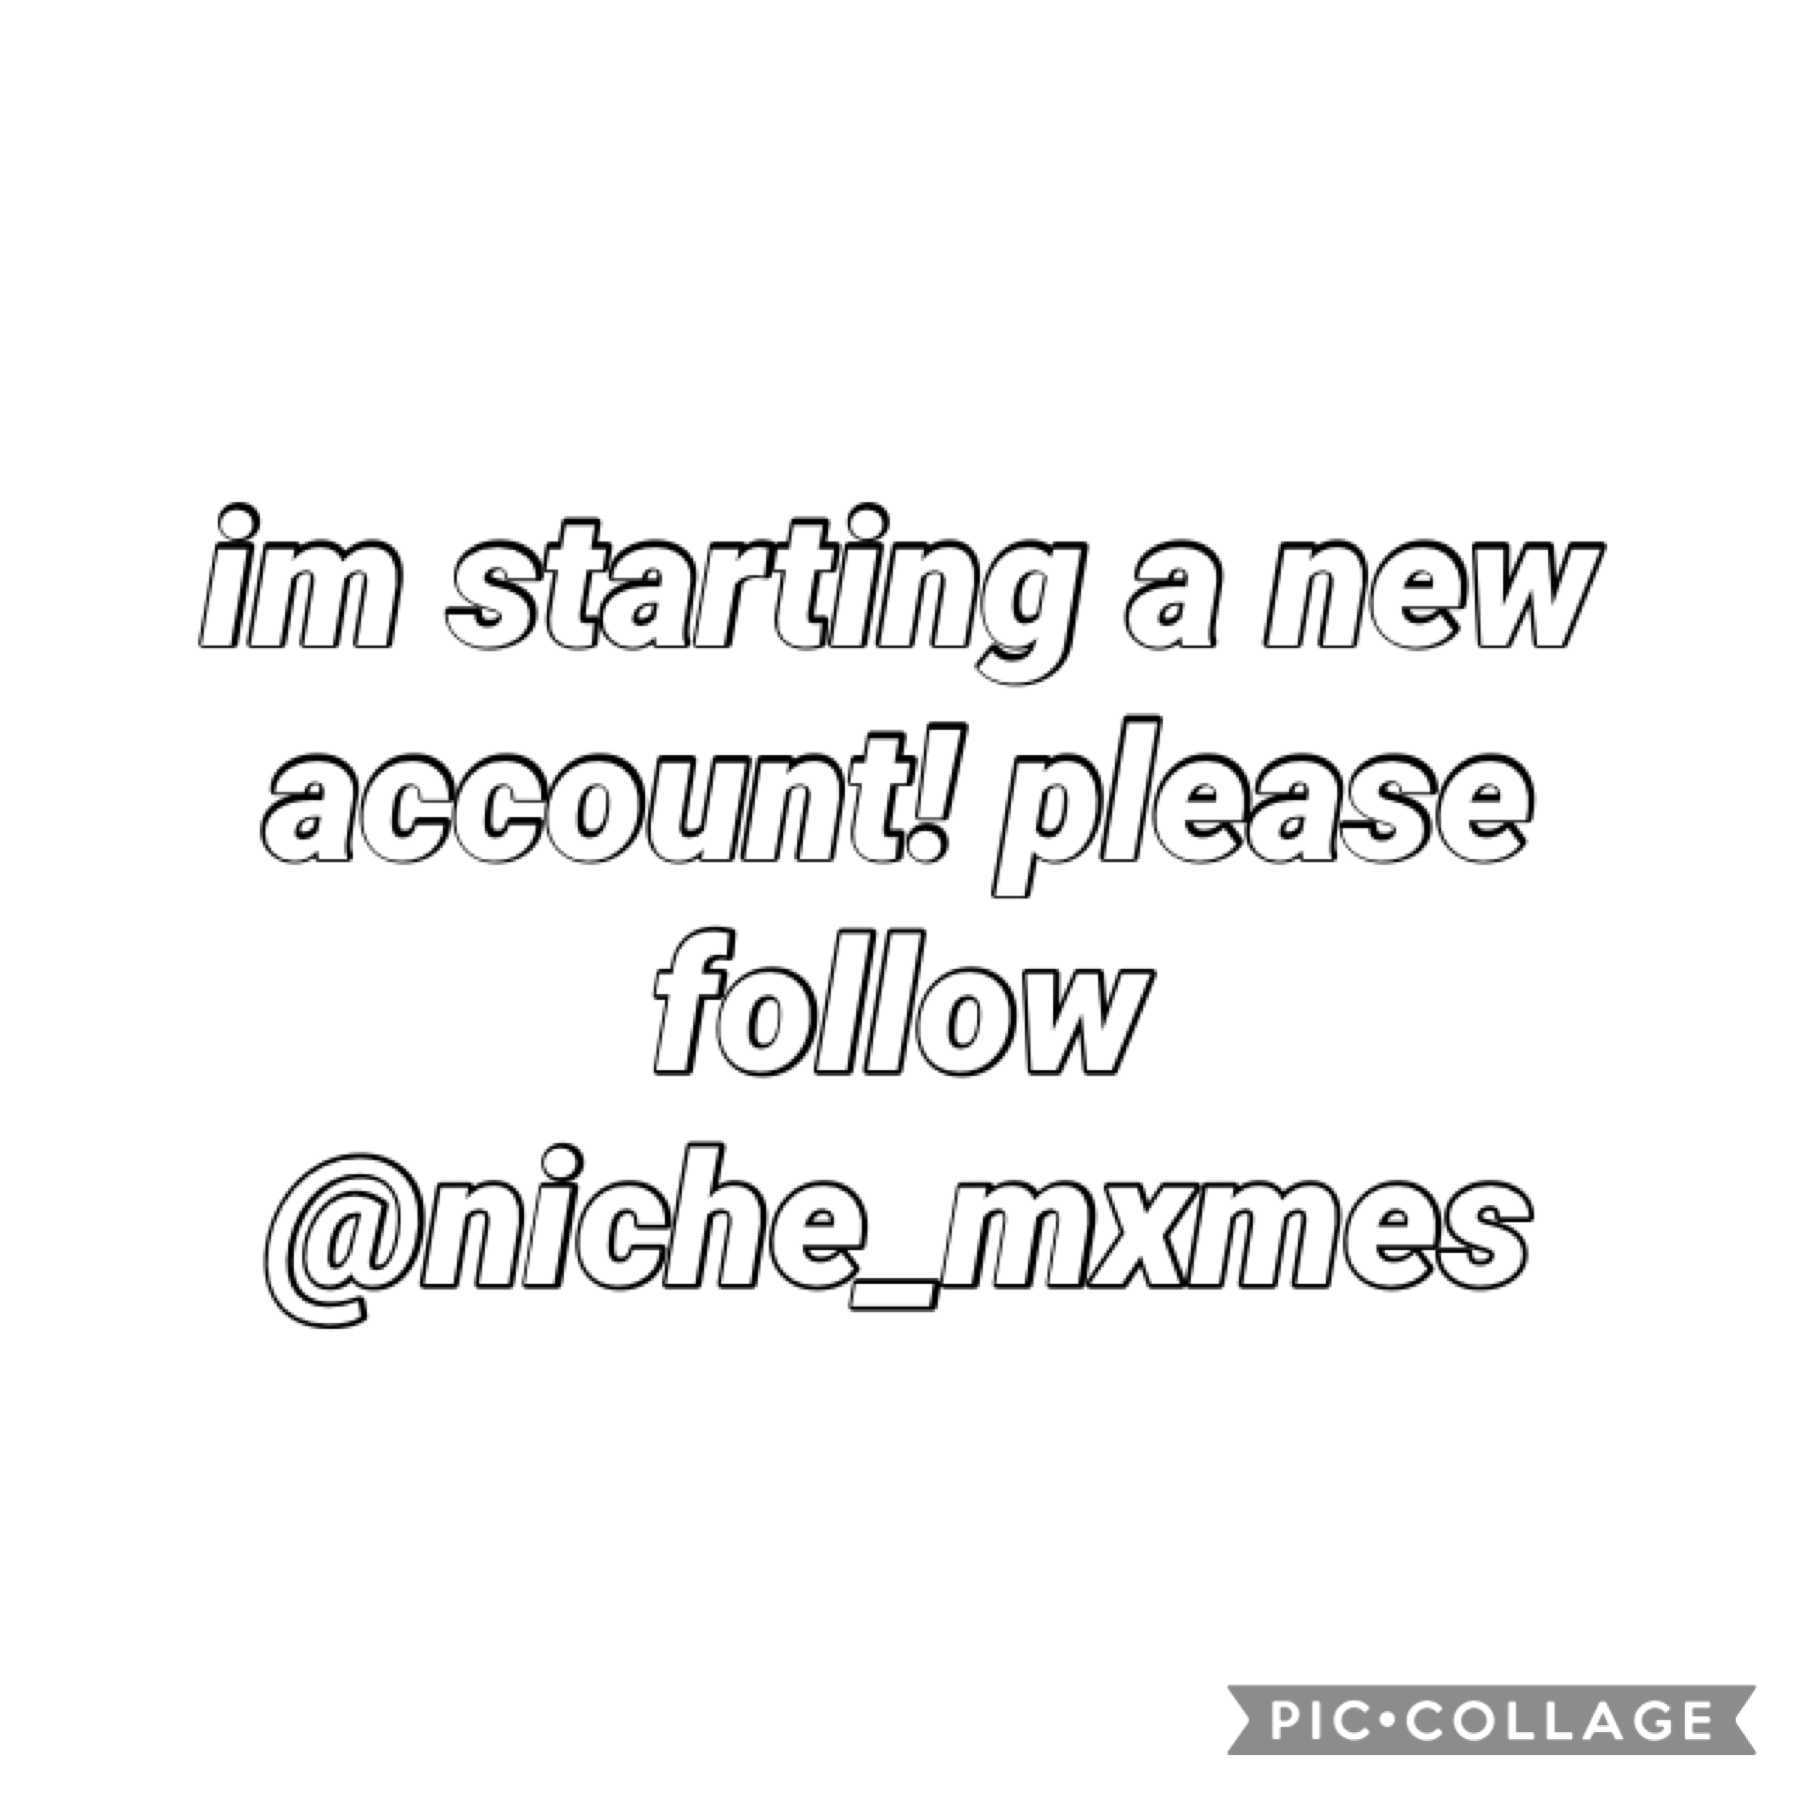 please follow @niche_mxmes